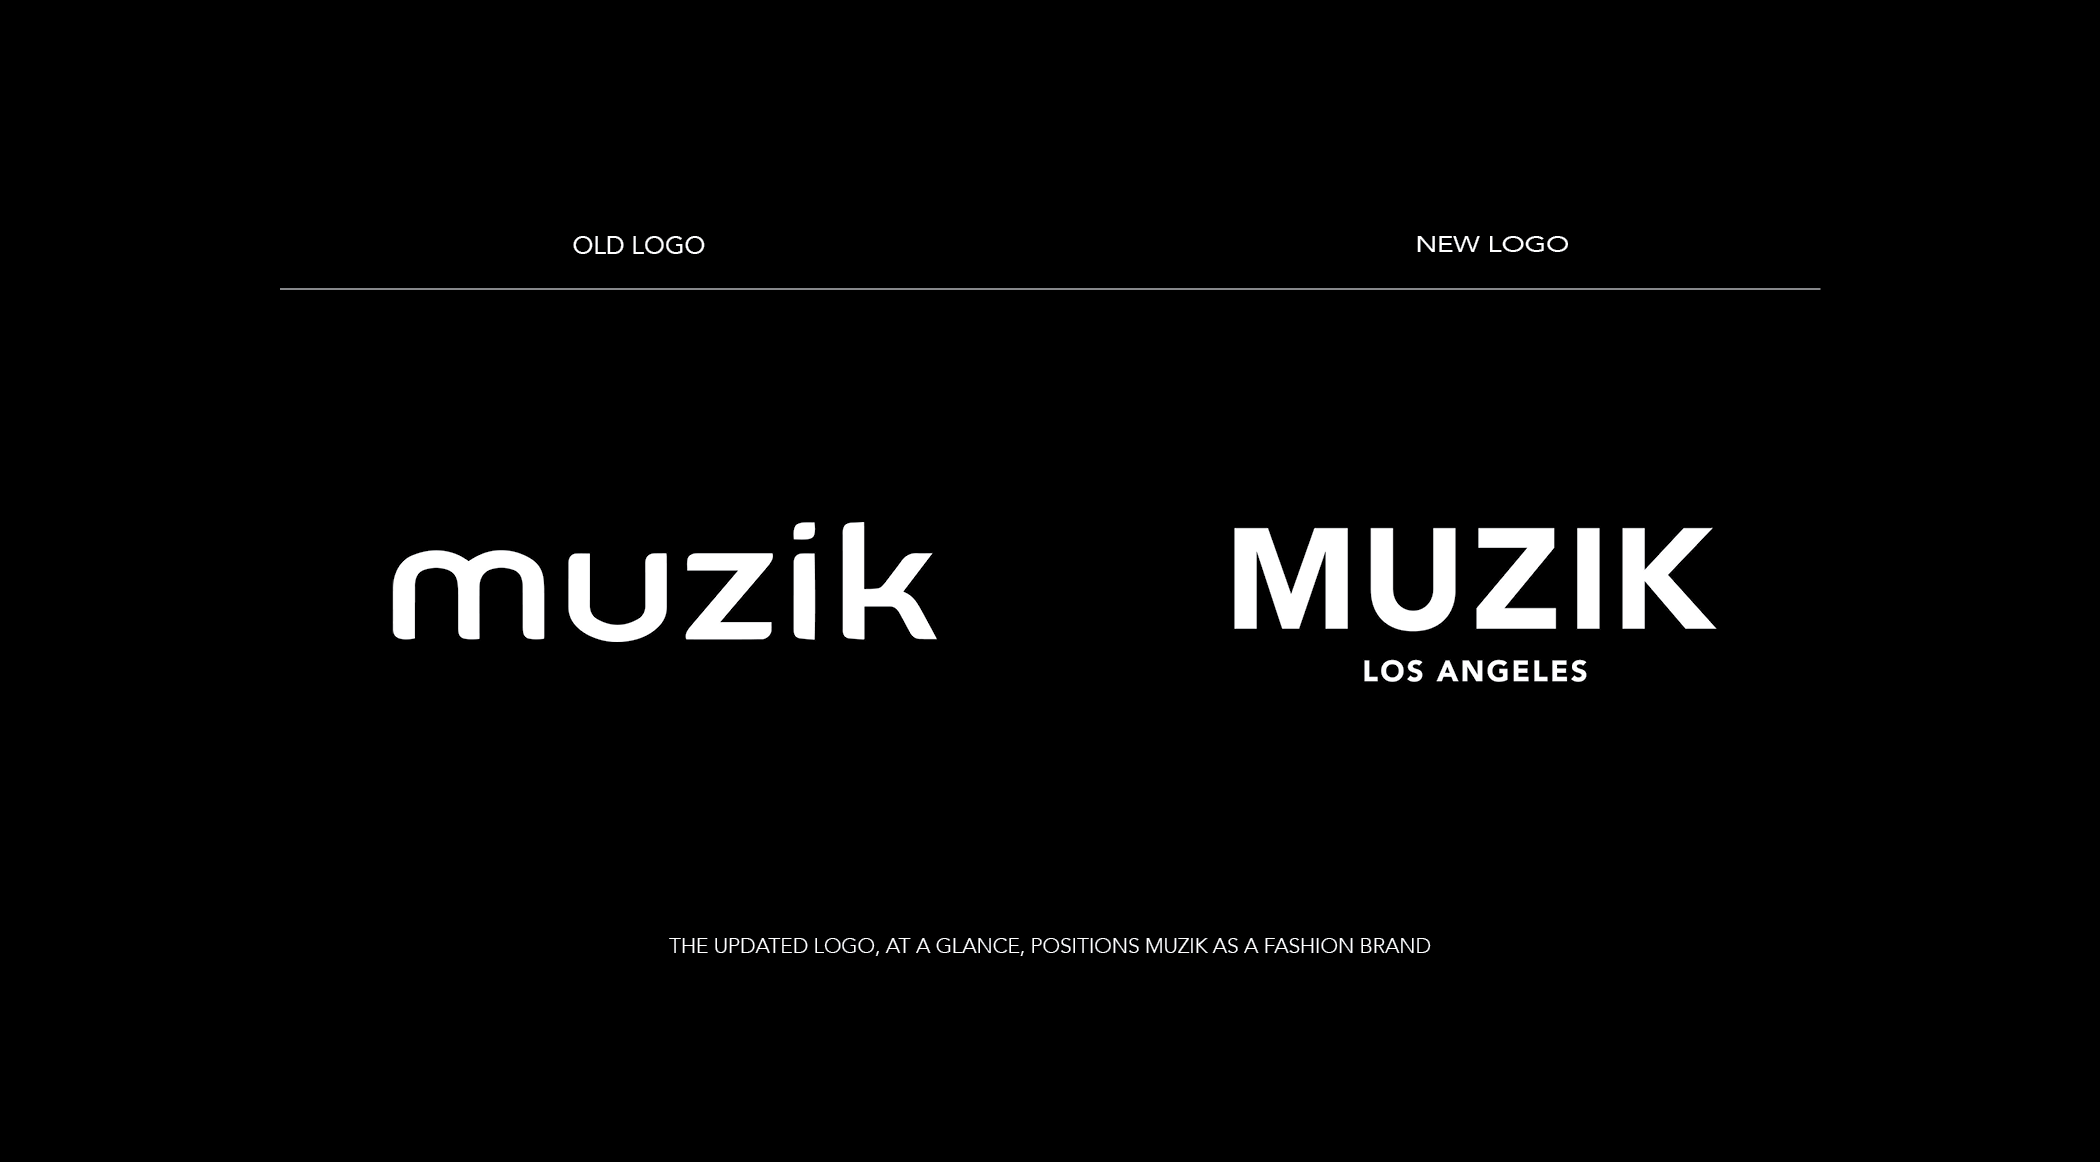 muzik connect old logo versus new logo